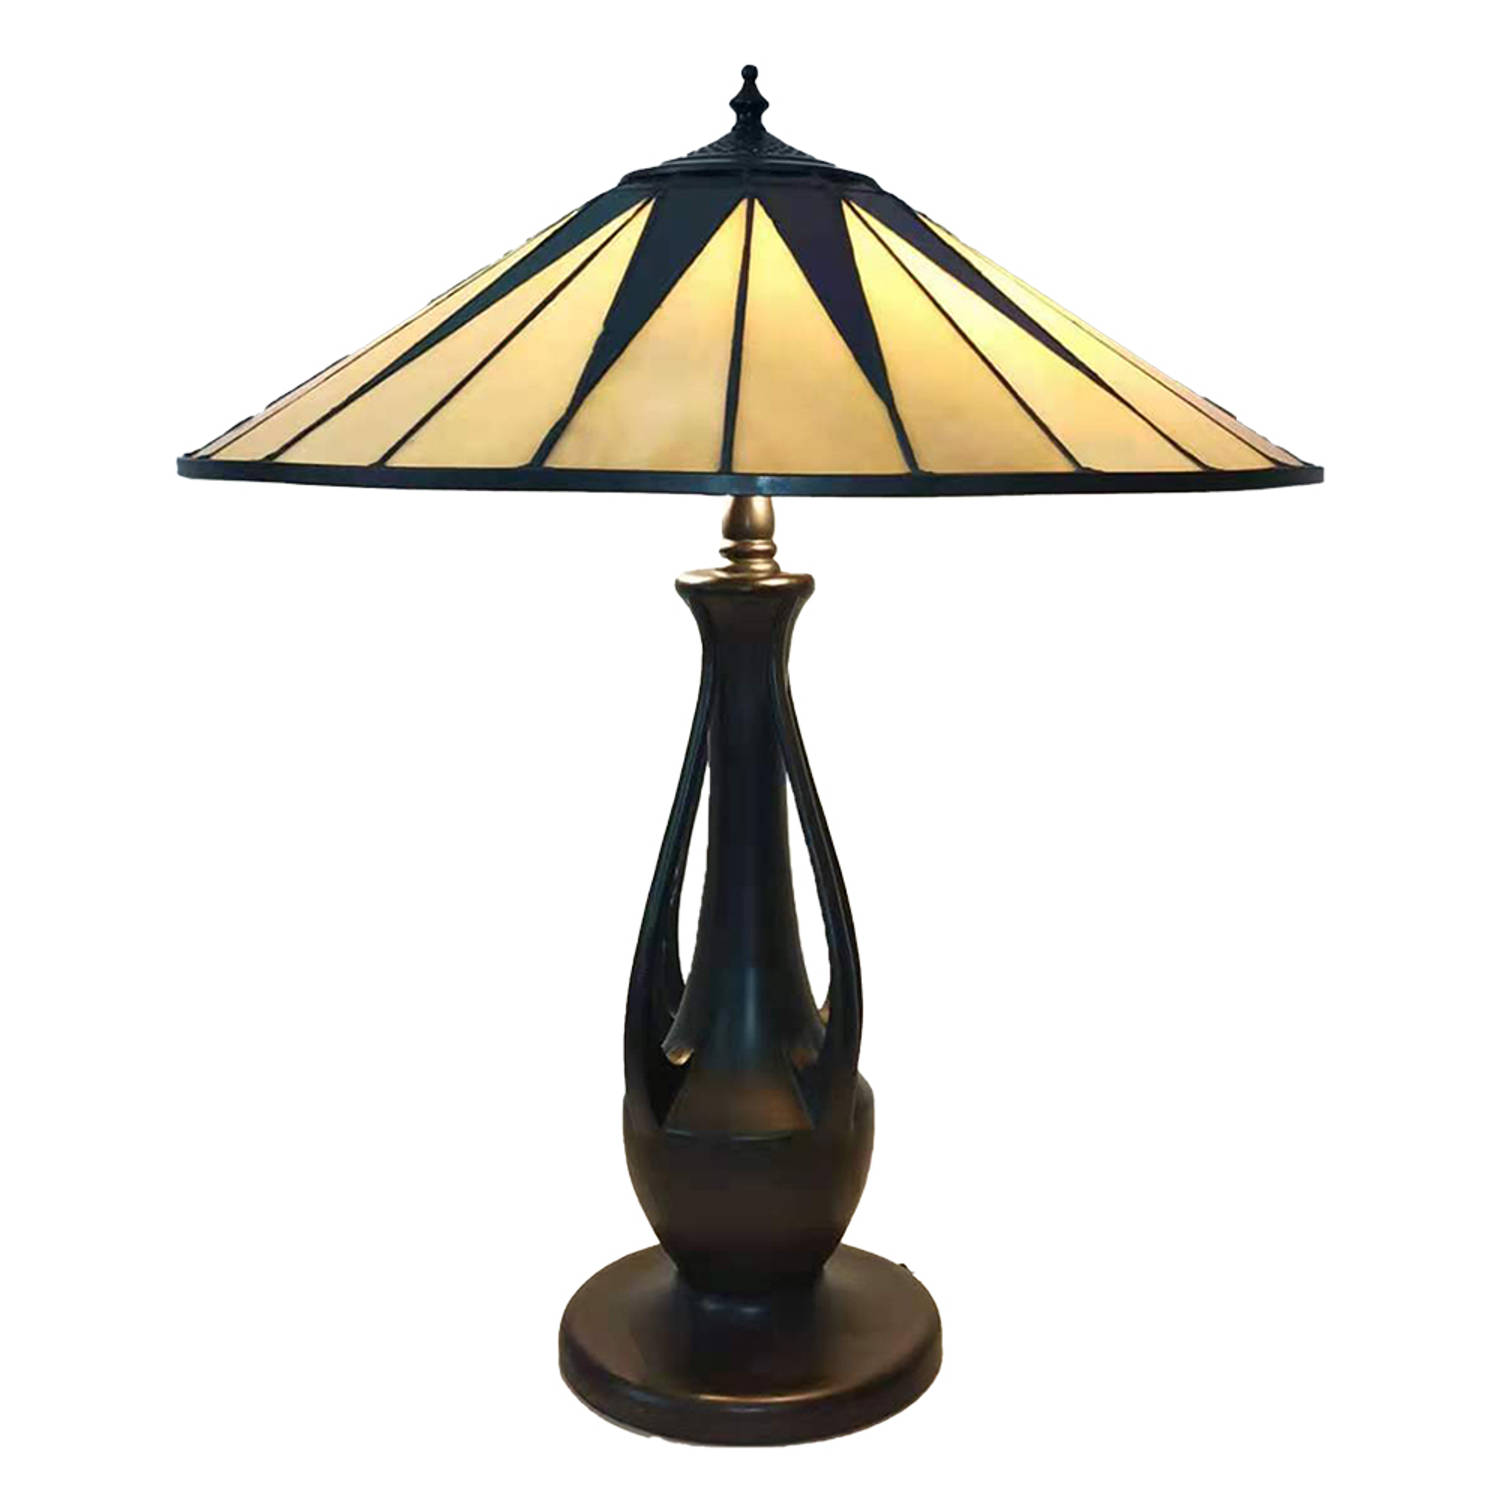 HAES deco - Tiffany Tafellamp Beige, Bruin Ø 48x60 Cm Fitting E27 / Lamp Max 2x60w